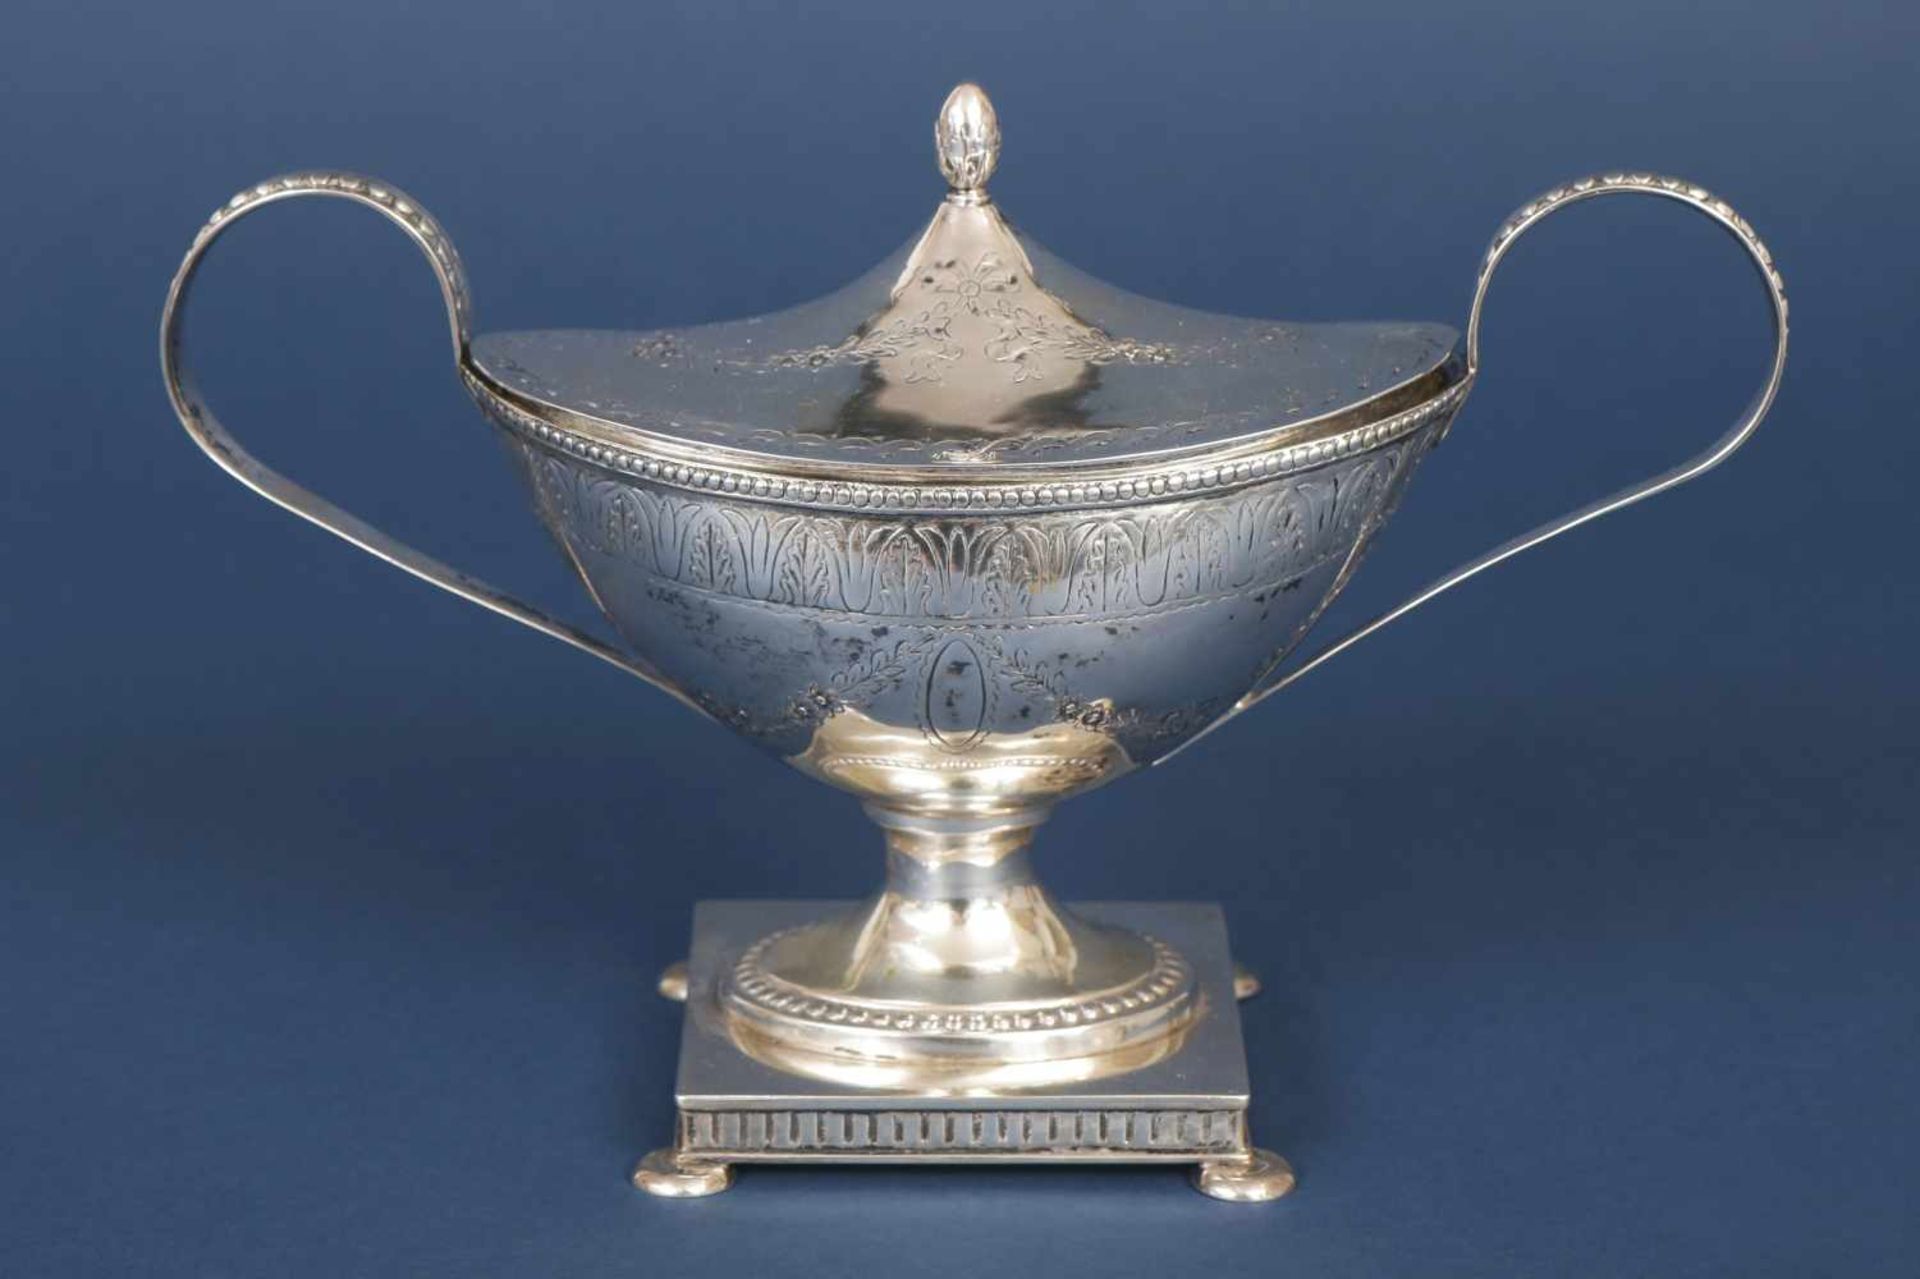 Silber-Zuckertopf im Stile des Klassizismusgestempelt ¨13 Lot¨ (Silber), ovale Pokalform mit 2